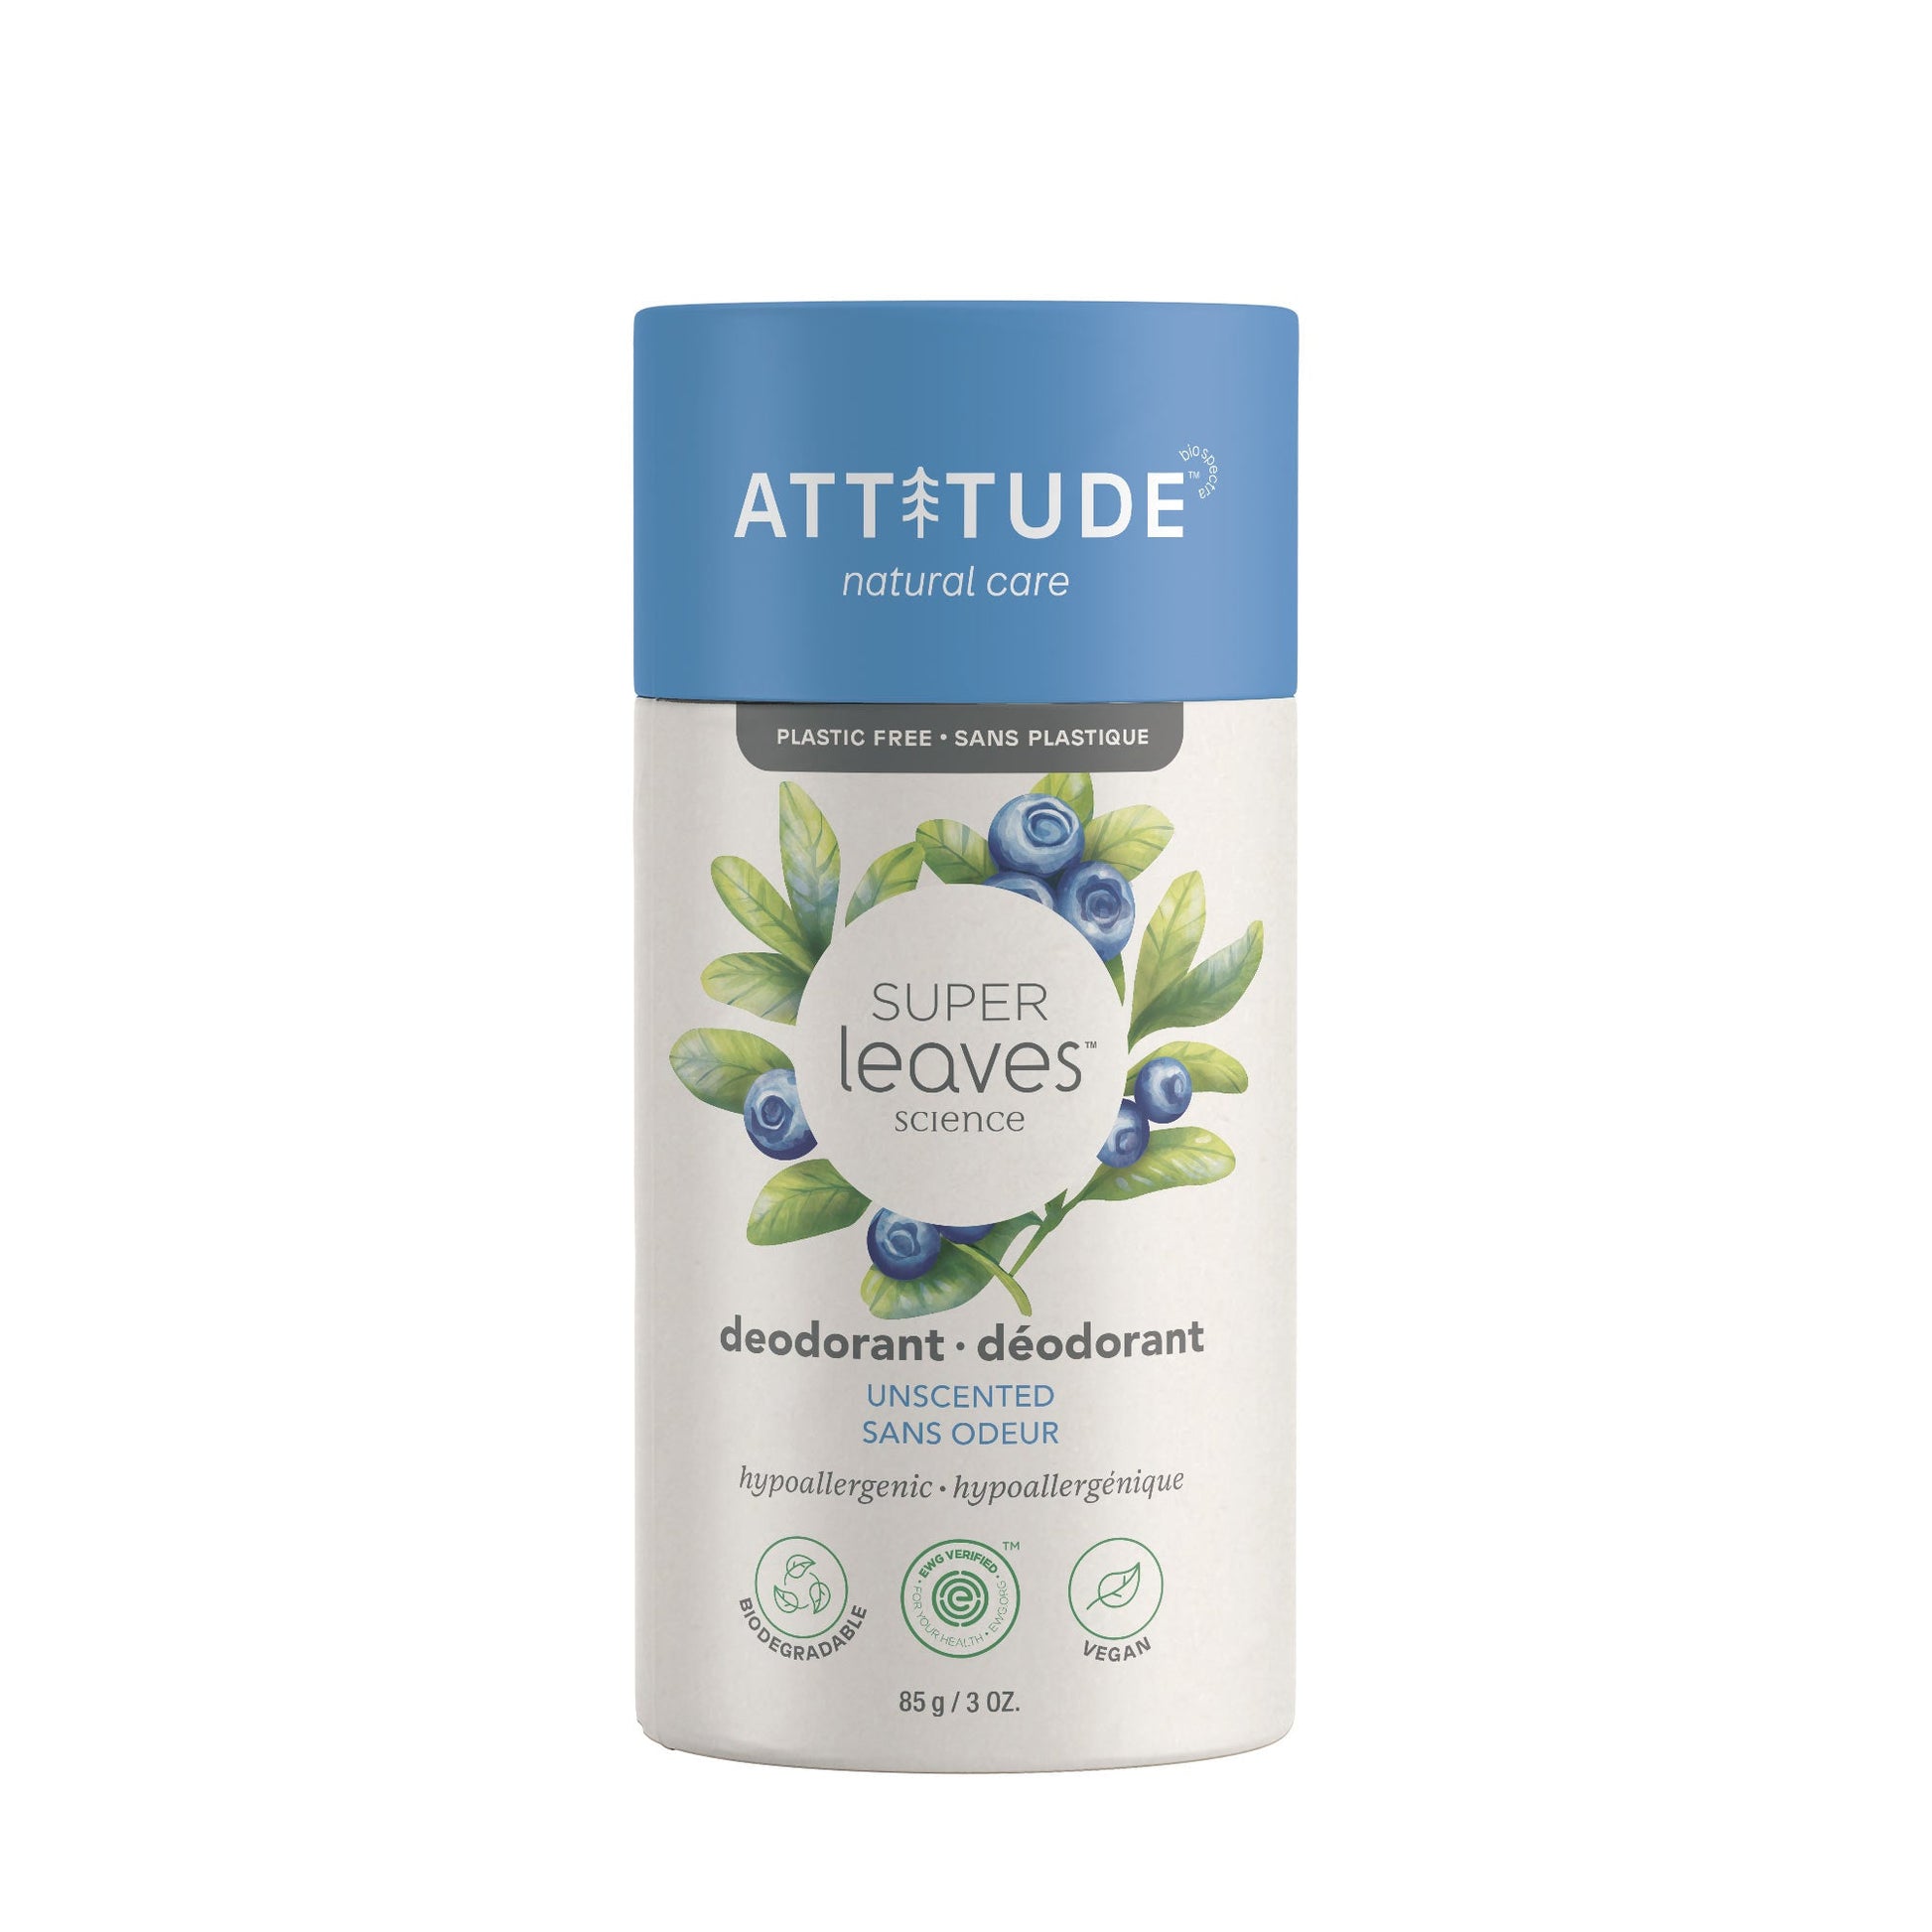 ATTITUDE Super leaves Biodegredable Deodorant Unscented _en? Unscented